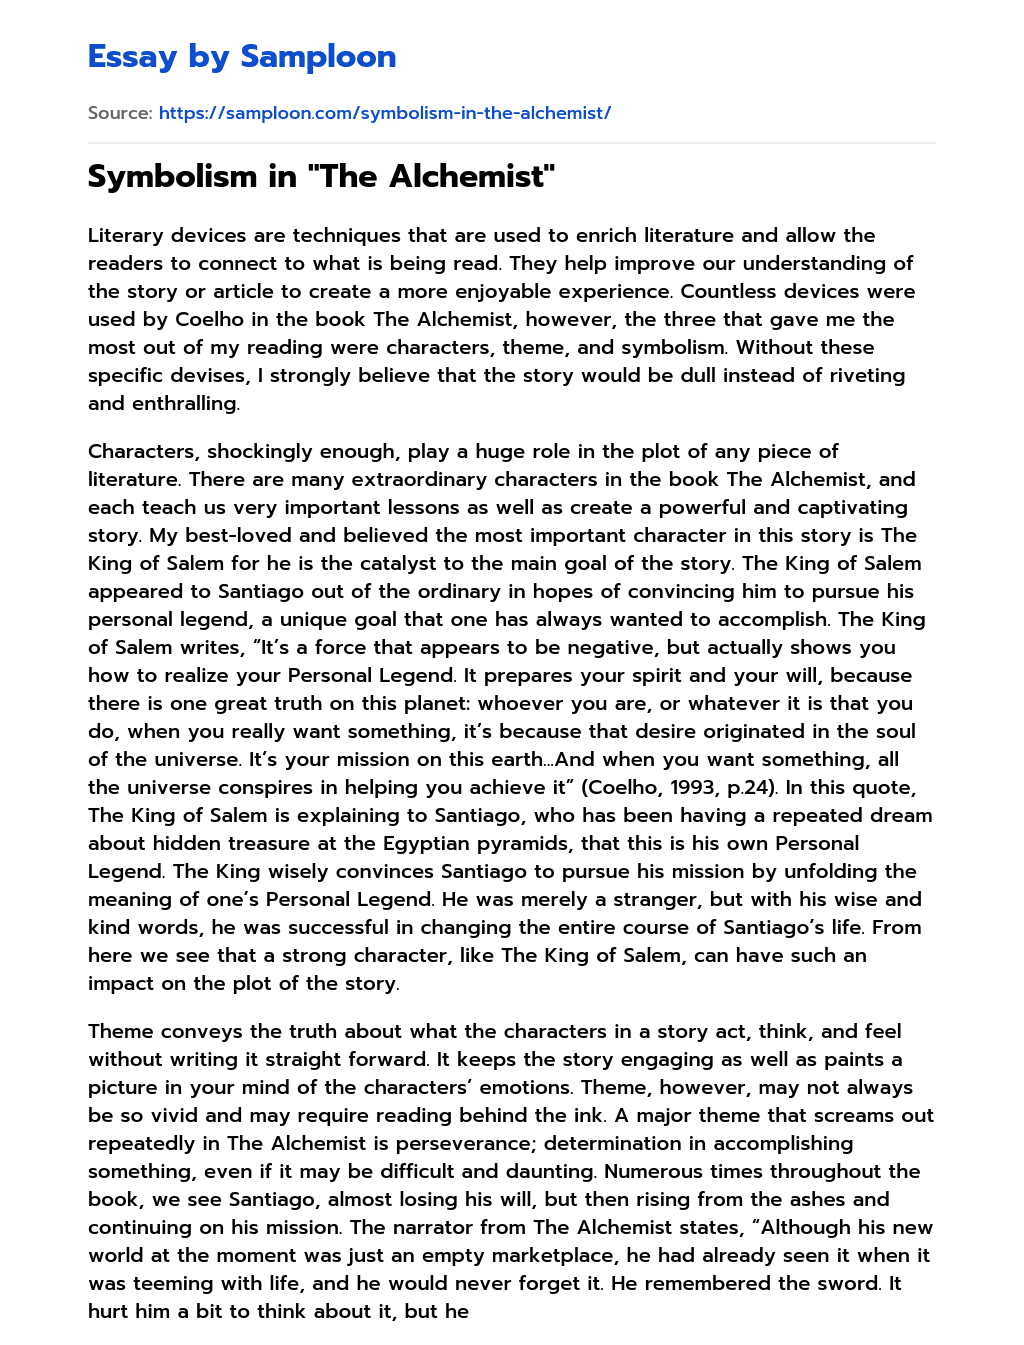 Symbolism in “The Alchemist” essay